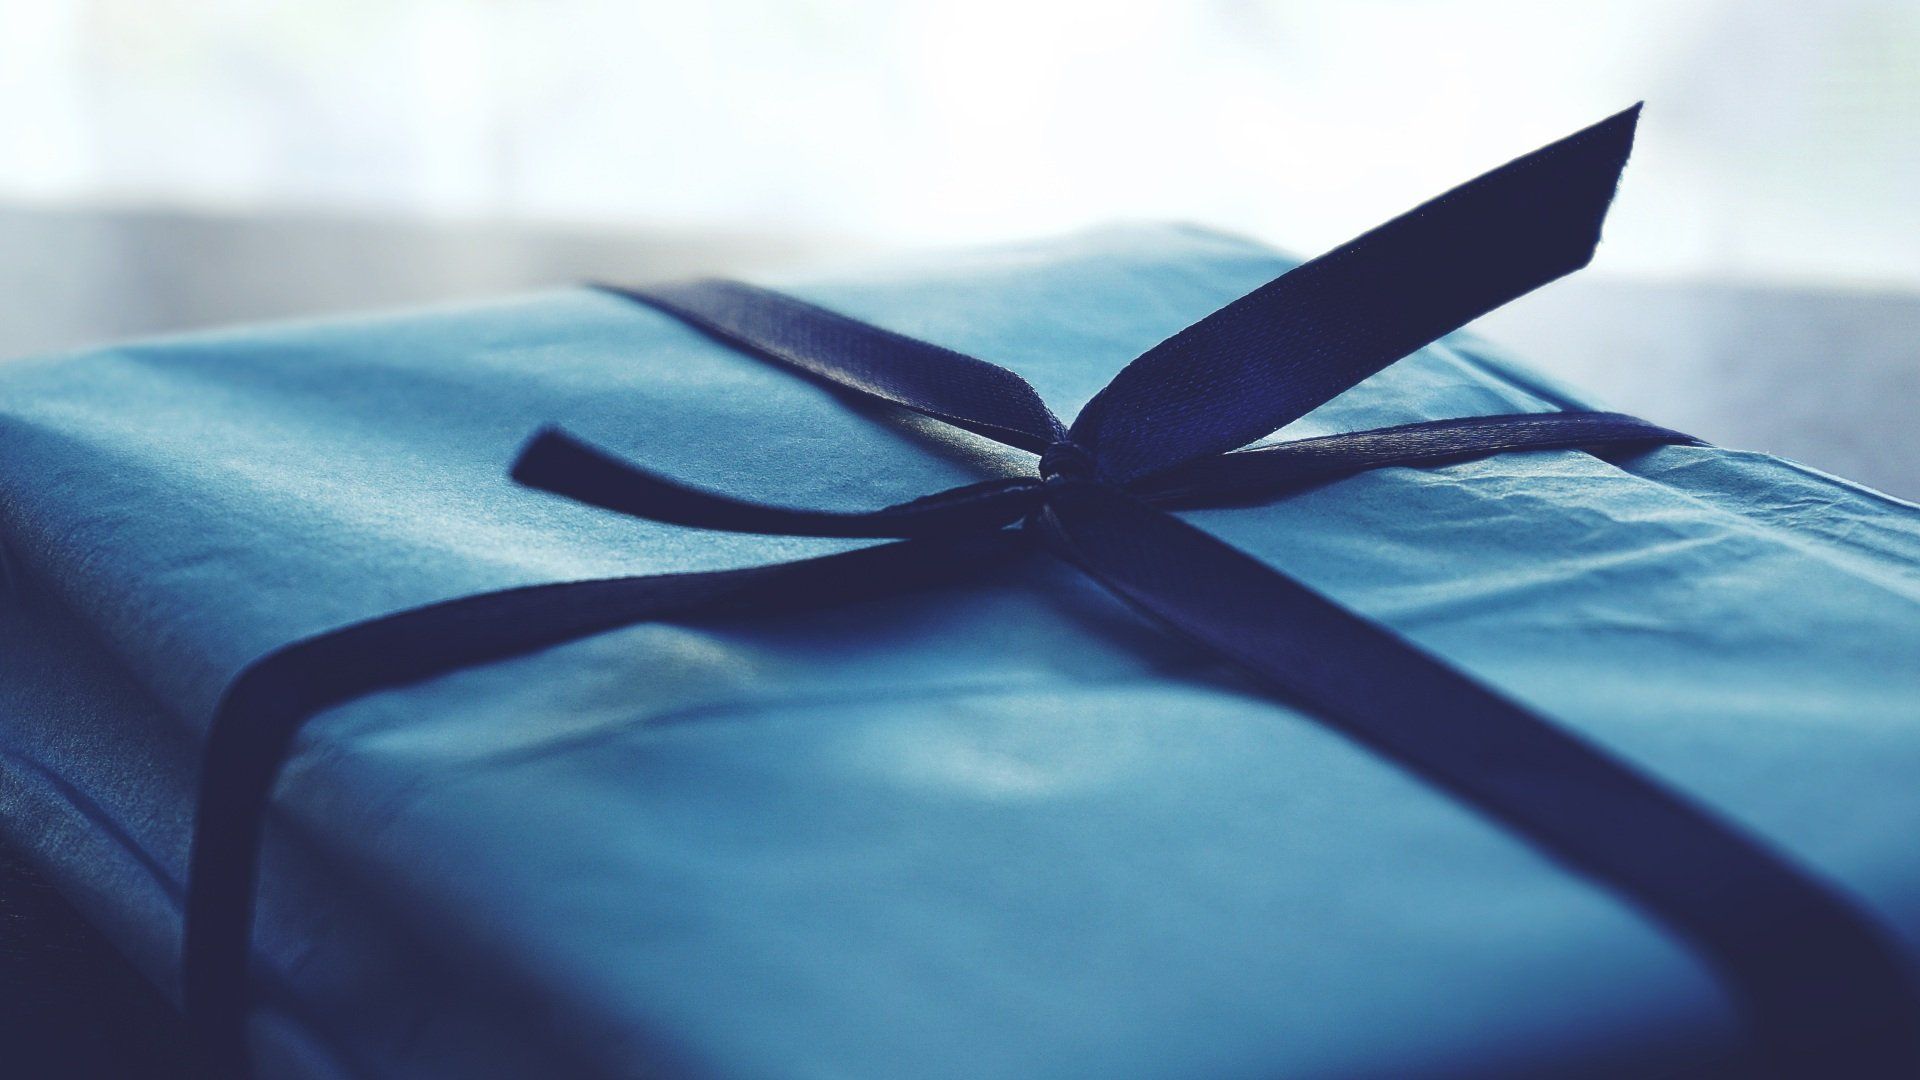 A light blue present with a dark blue ribbon